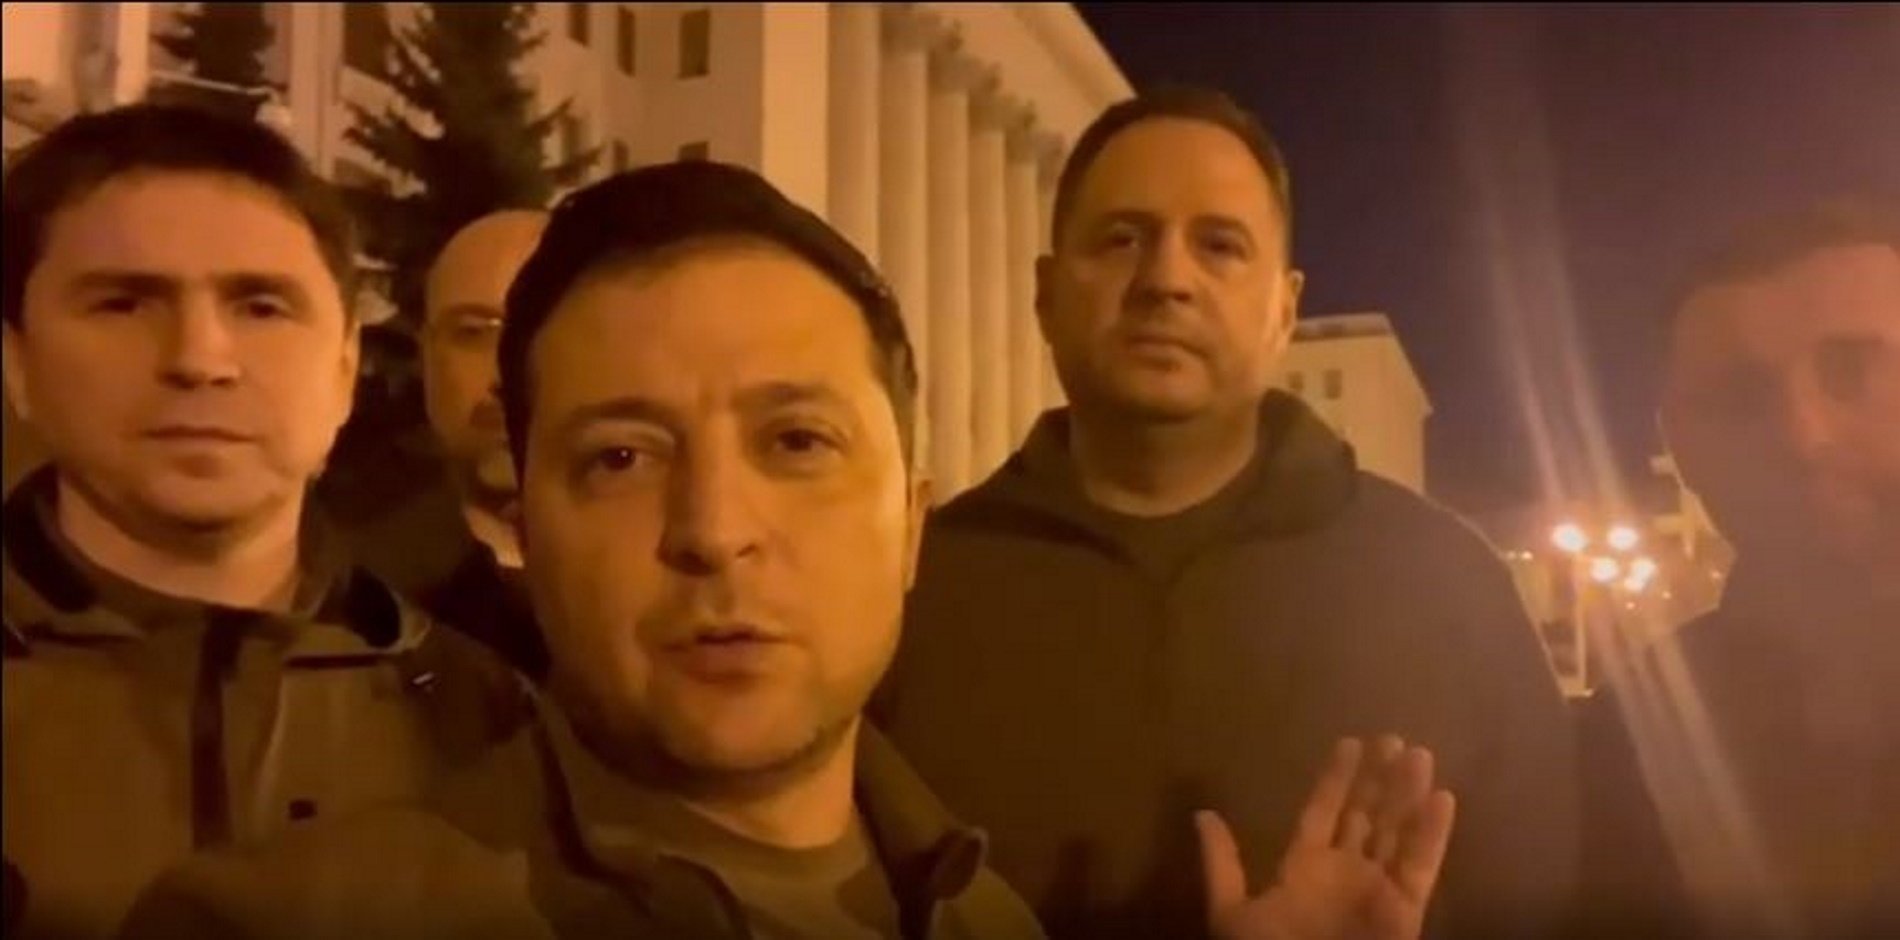 Guerra Rússia-Ucraïna: Zelenski demuestra que continúa en Ucrania con un video